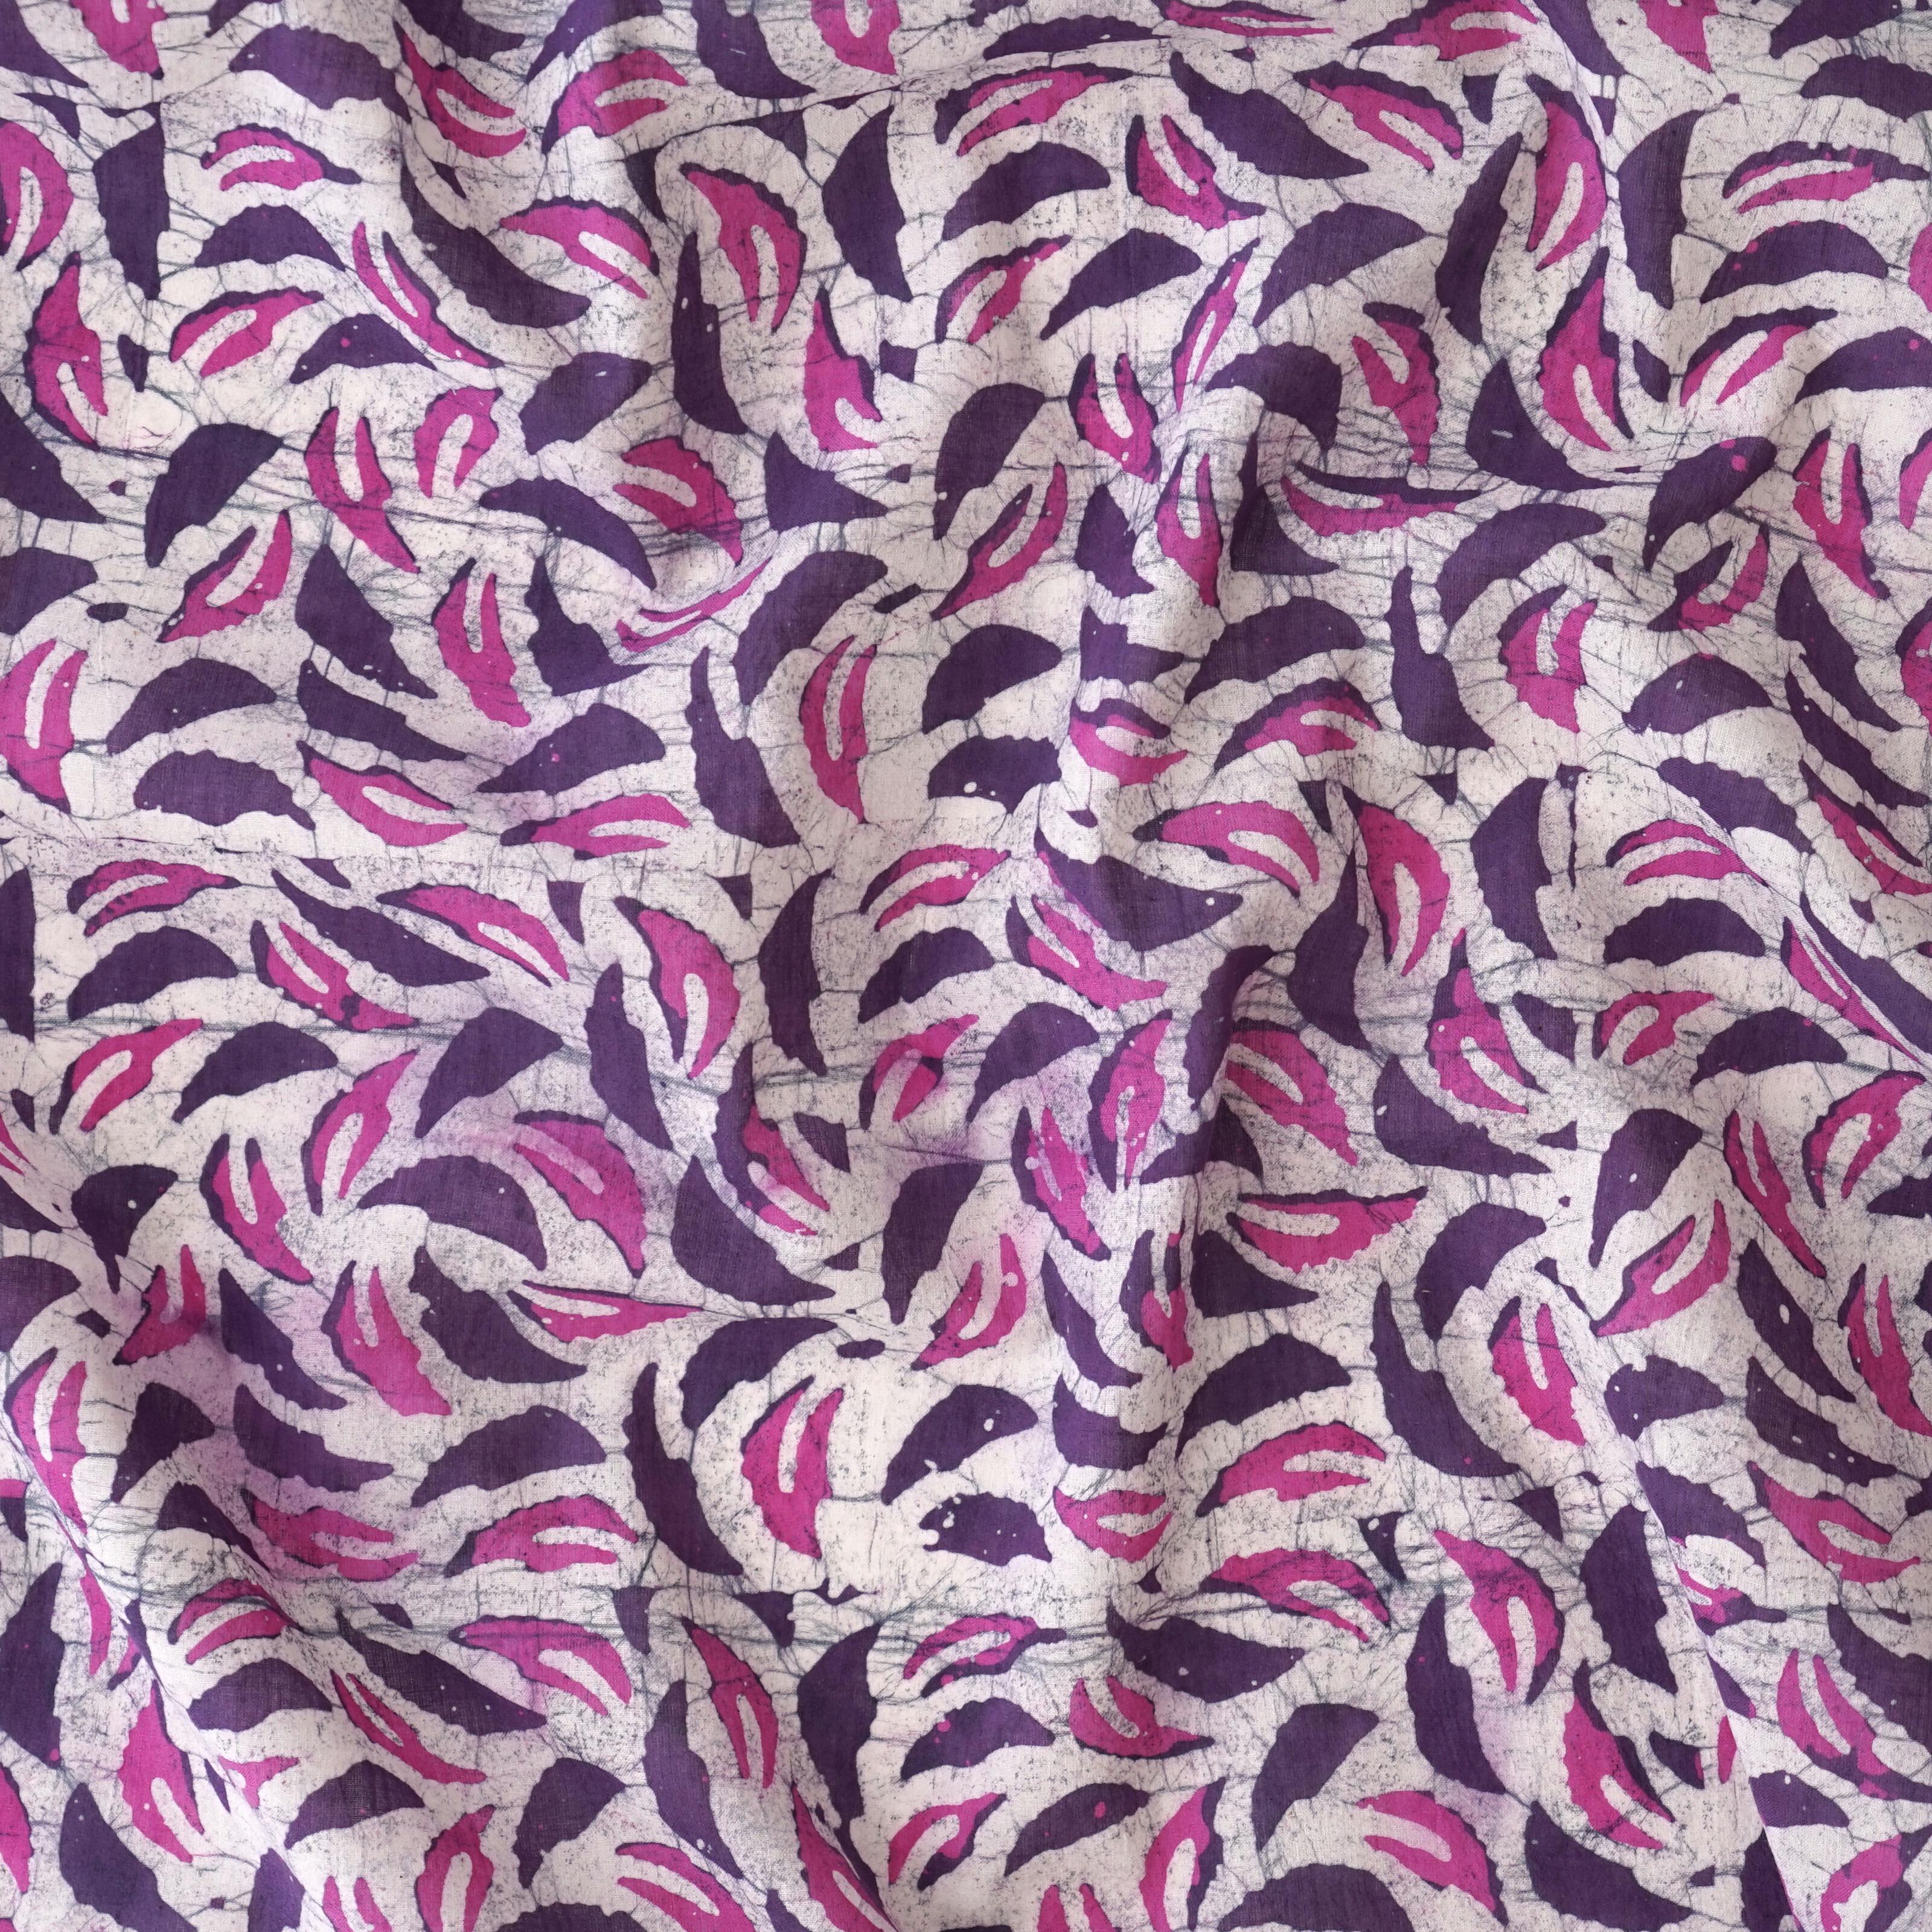 100% Block-Printed Batik Cotton Fabric From India - Purple Rain Motif - Contrast